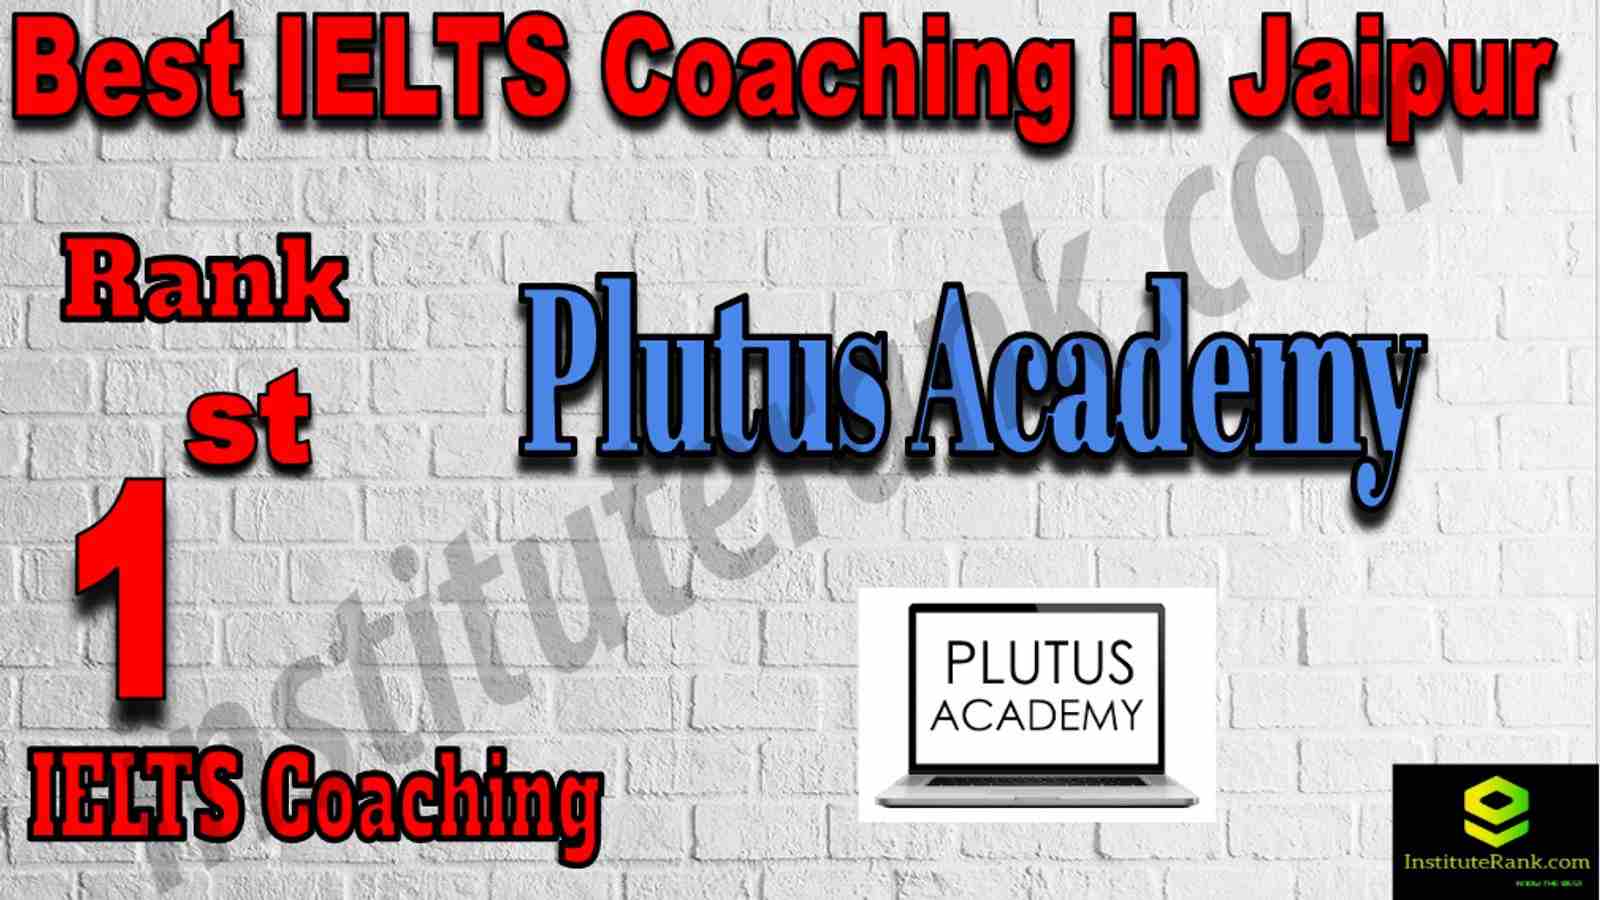 1st Best IELTS Coaching in Jaipur